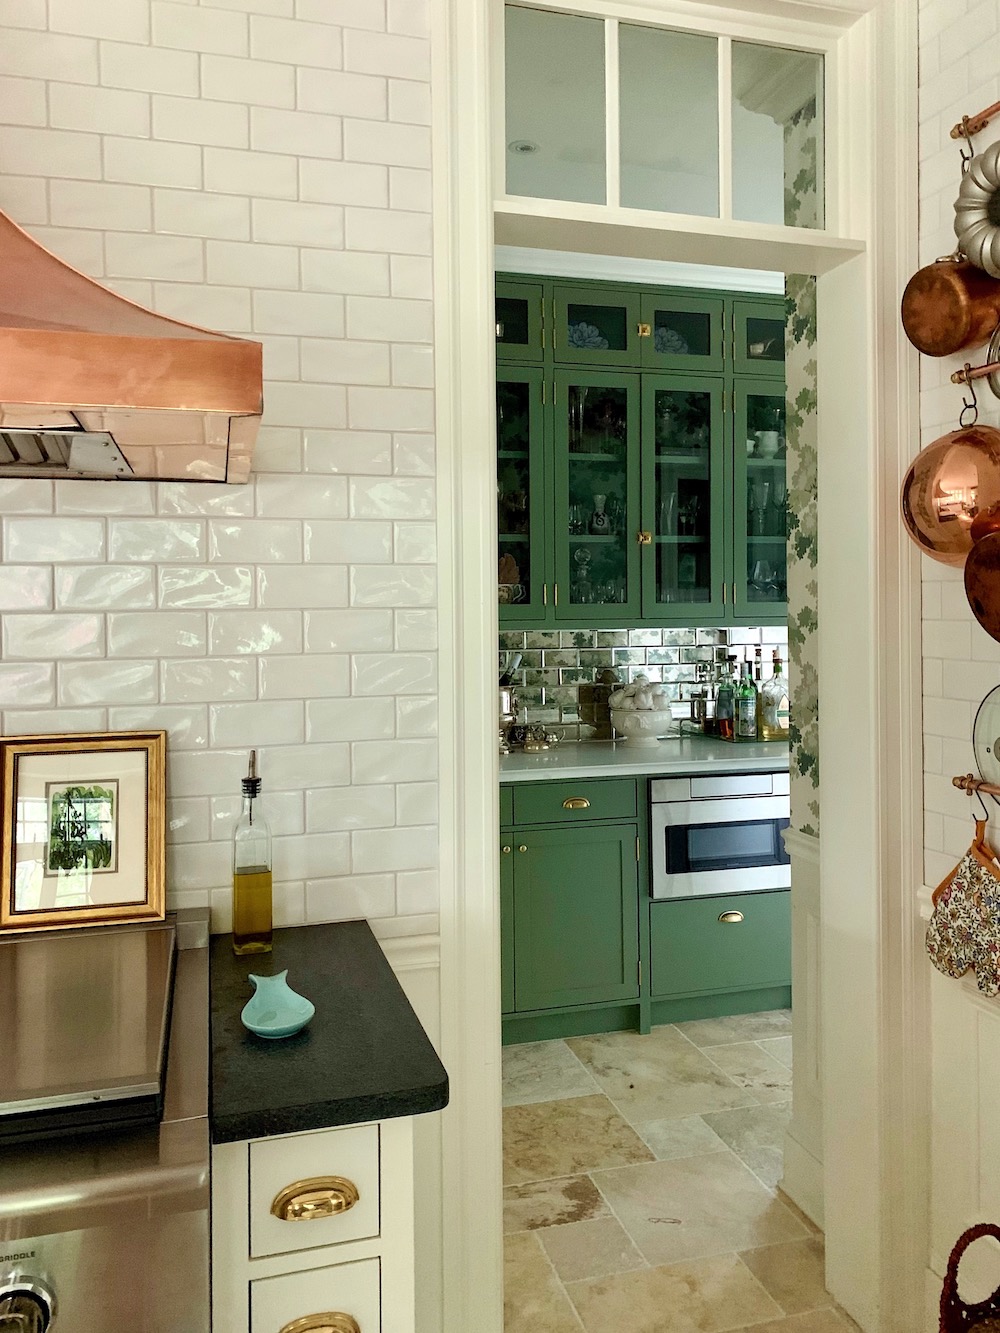 New transom window - new butler's pantry - Farrow & Ball Calke Green cabinetry